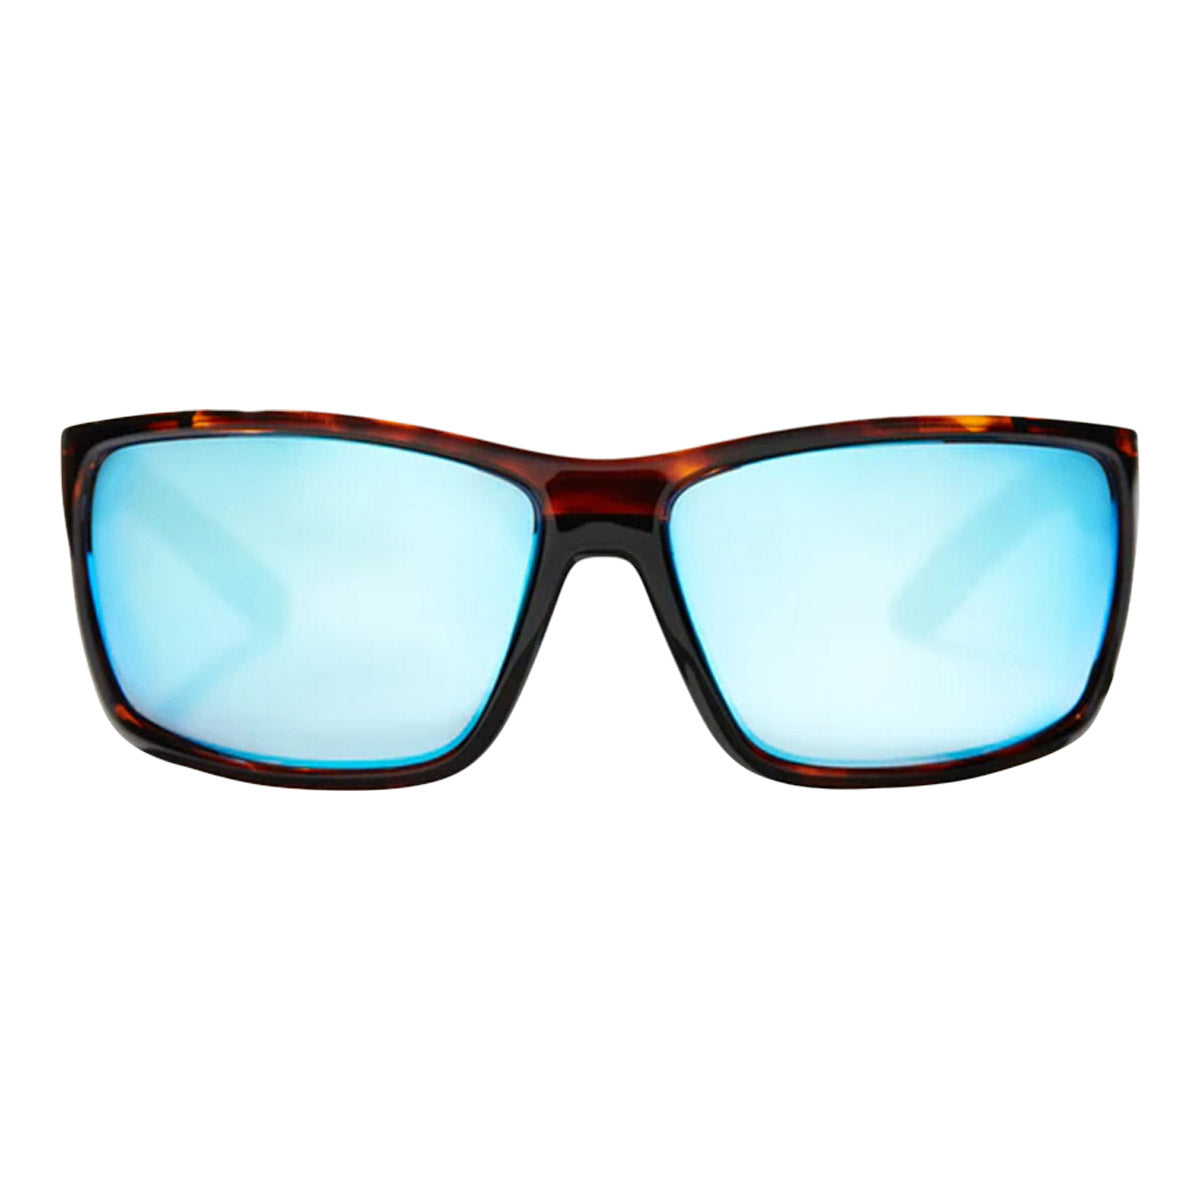 Bajio Bales Beach Sunglasses